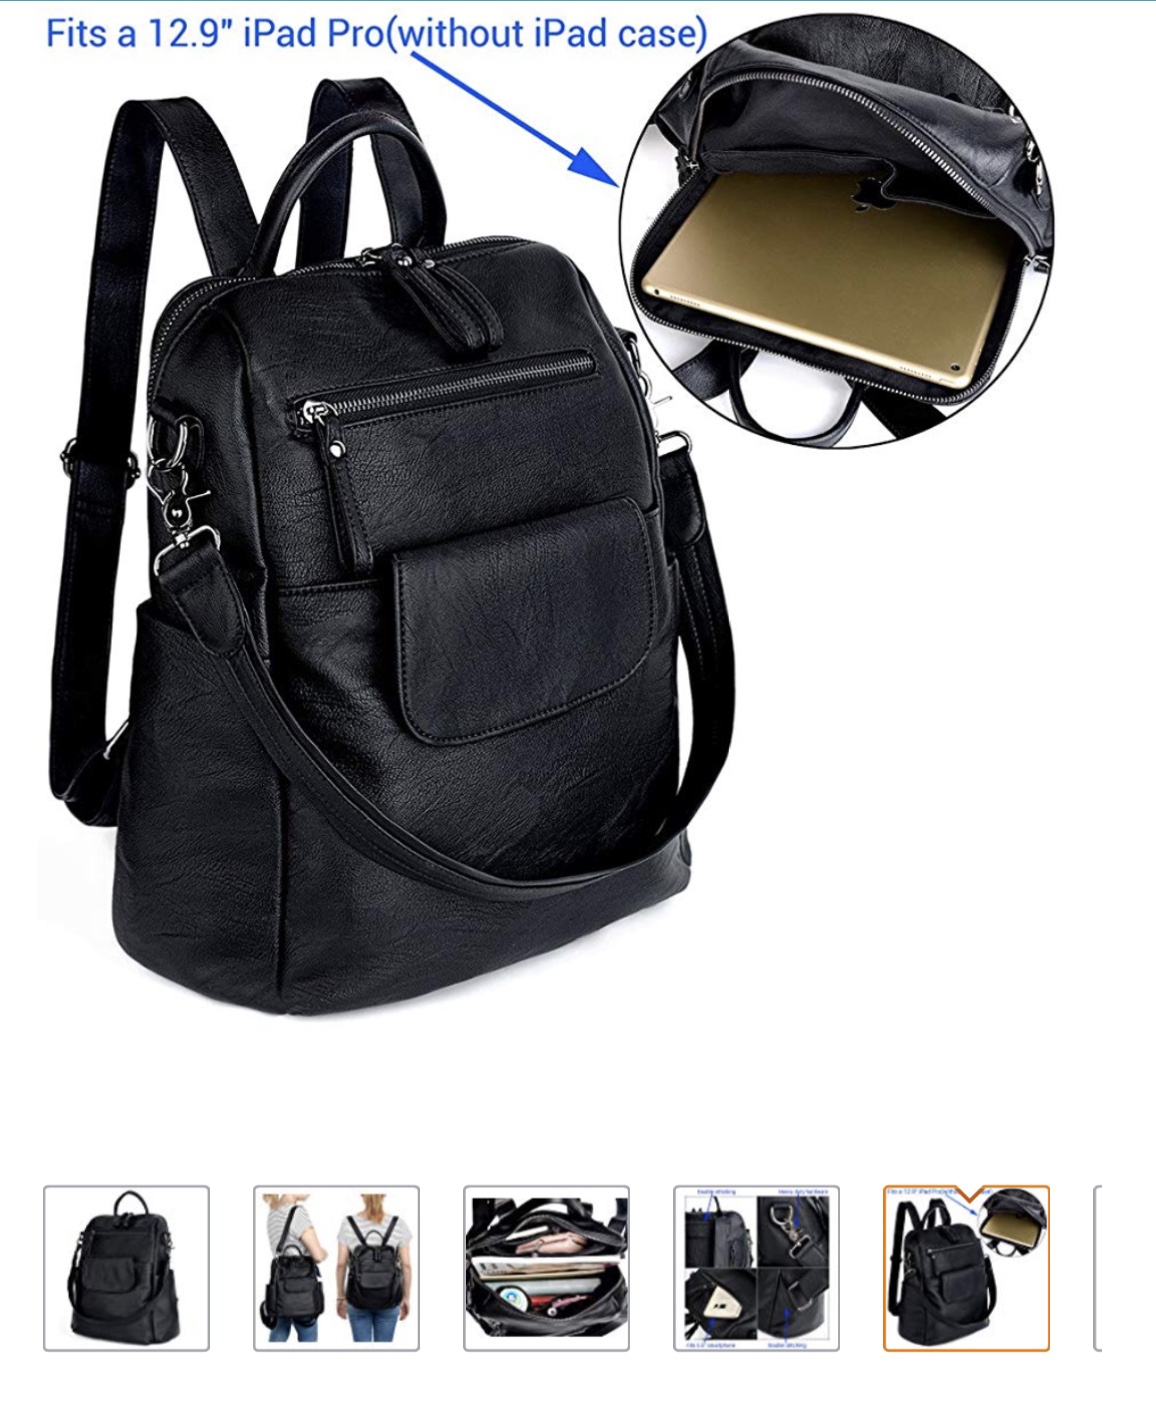 UTO Backpack from Amazon